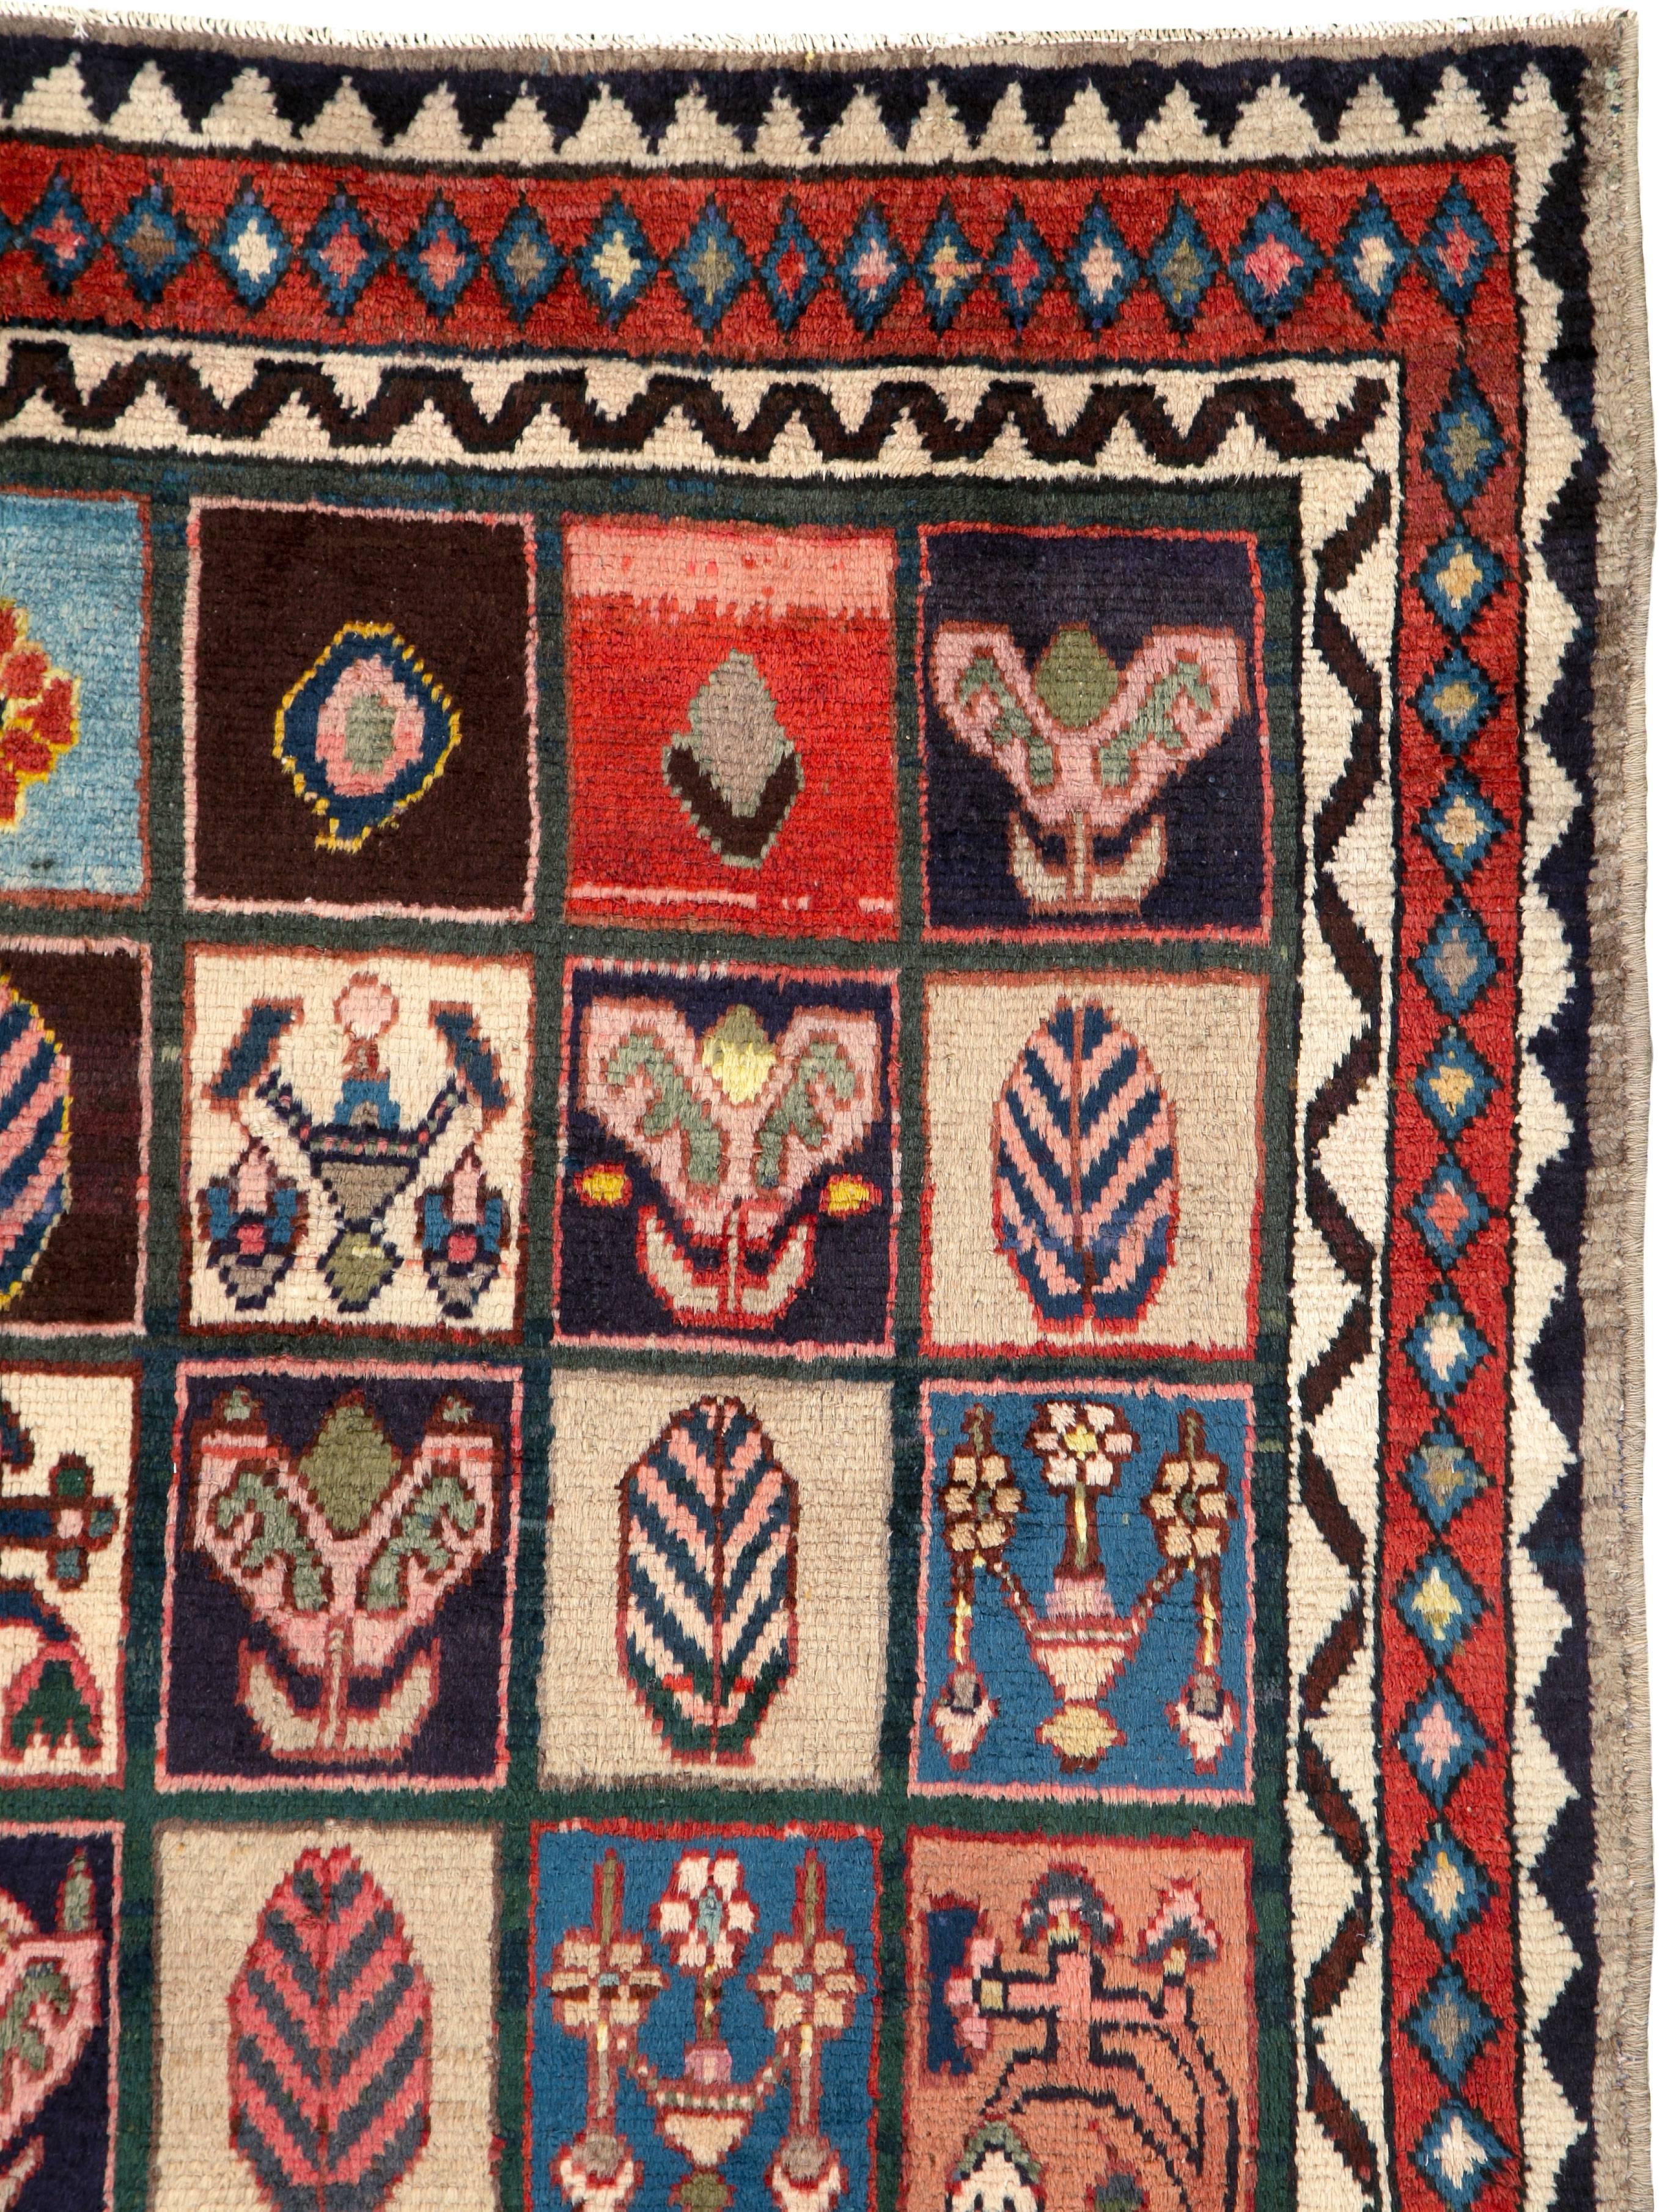 A garden design Persian Bakhtiari rug from the mid-20th century.

Measures: 5' 7